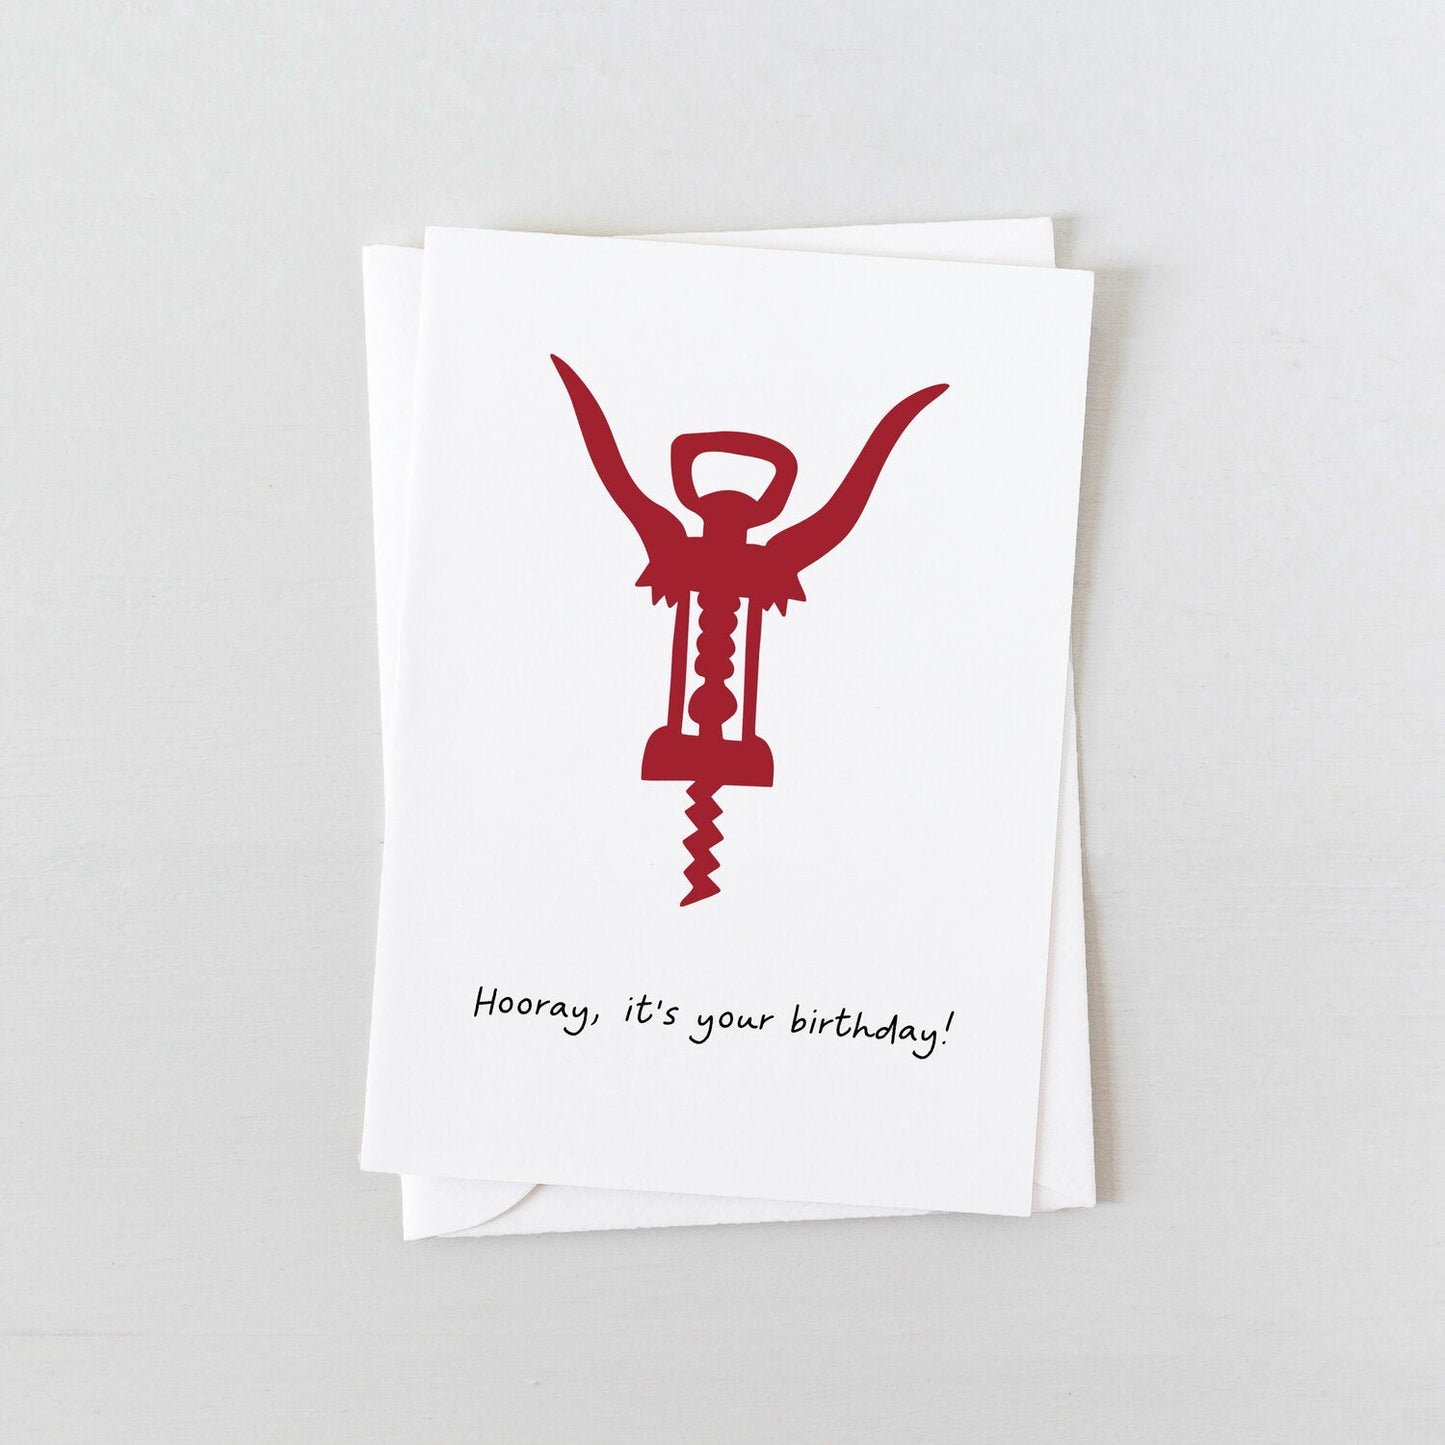 Laura Sevigny Design - Hooray, it’s your birthday! greeting card